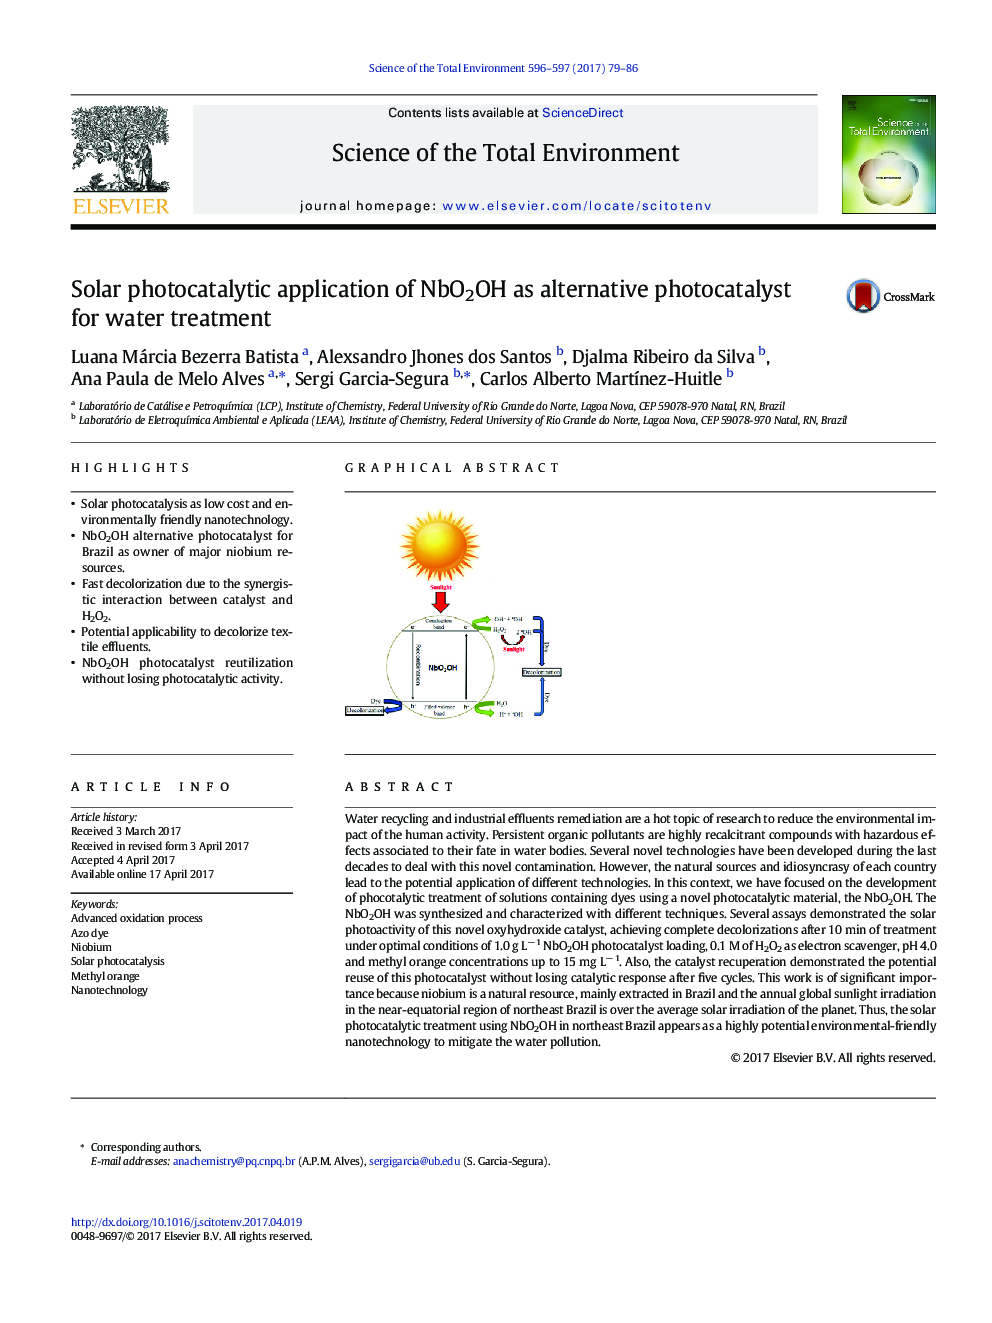 Solar photocatalytic application of NbO2OH as alternative photocatalyst for water treatment